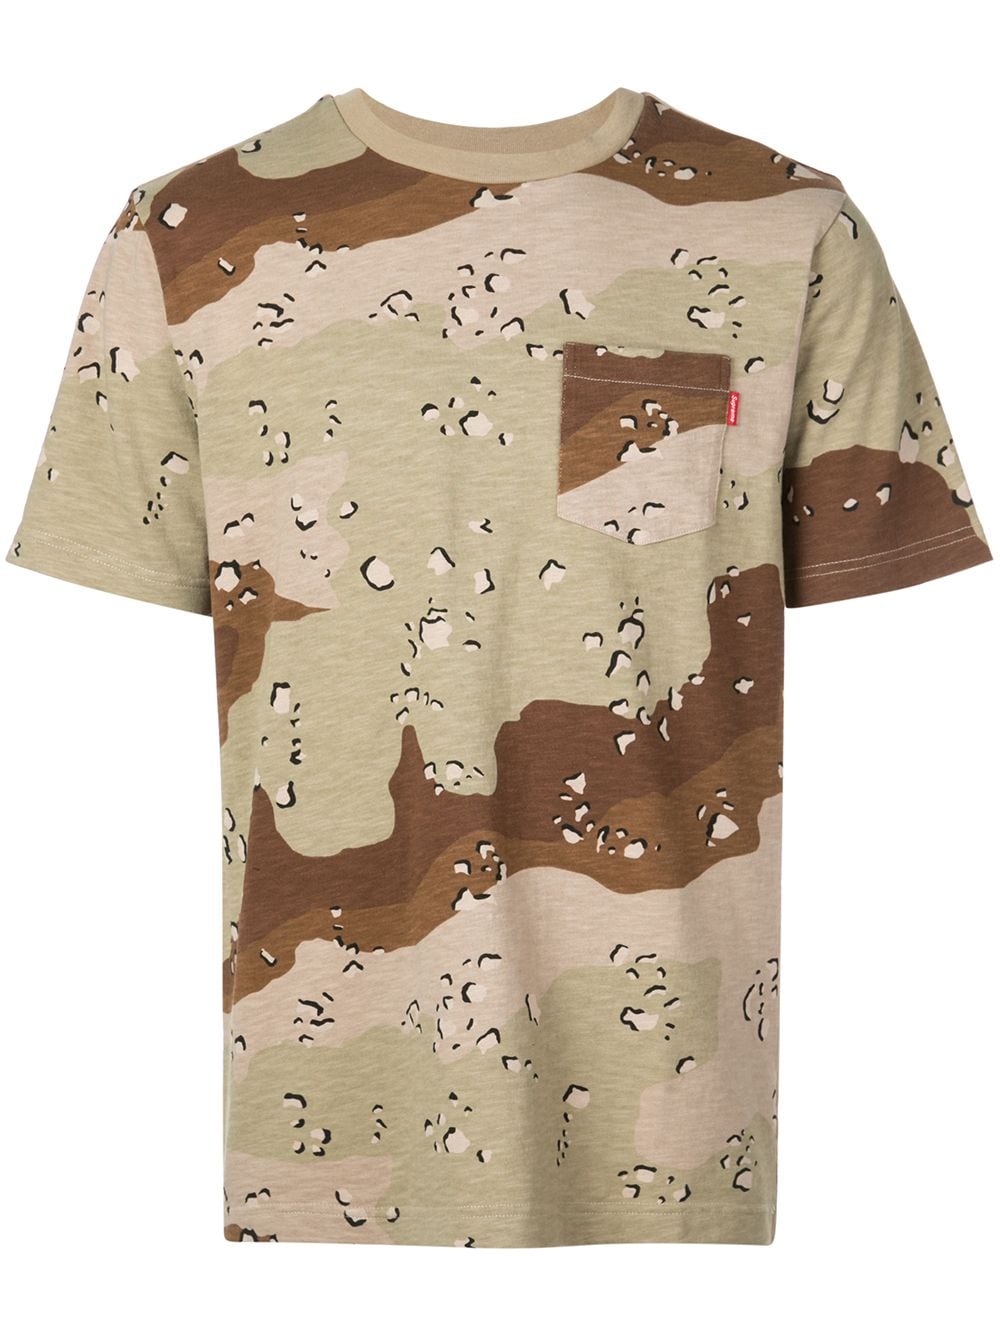 supreme camouflage shirt